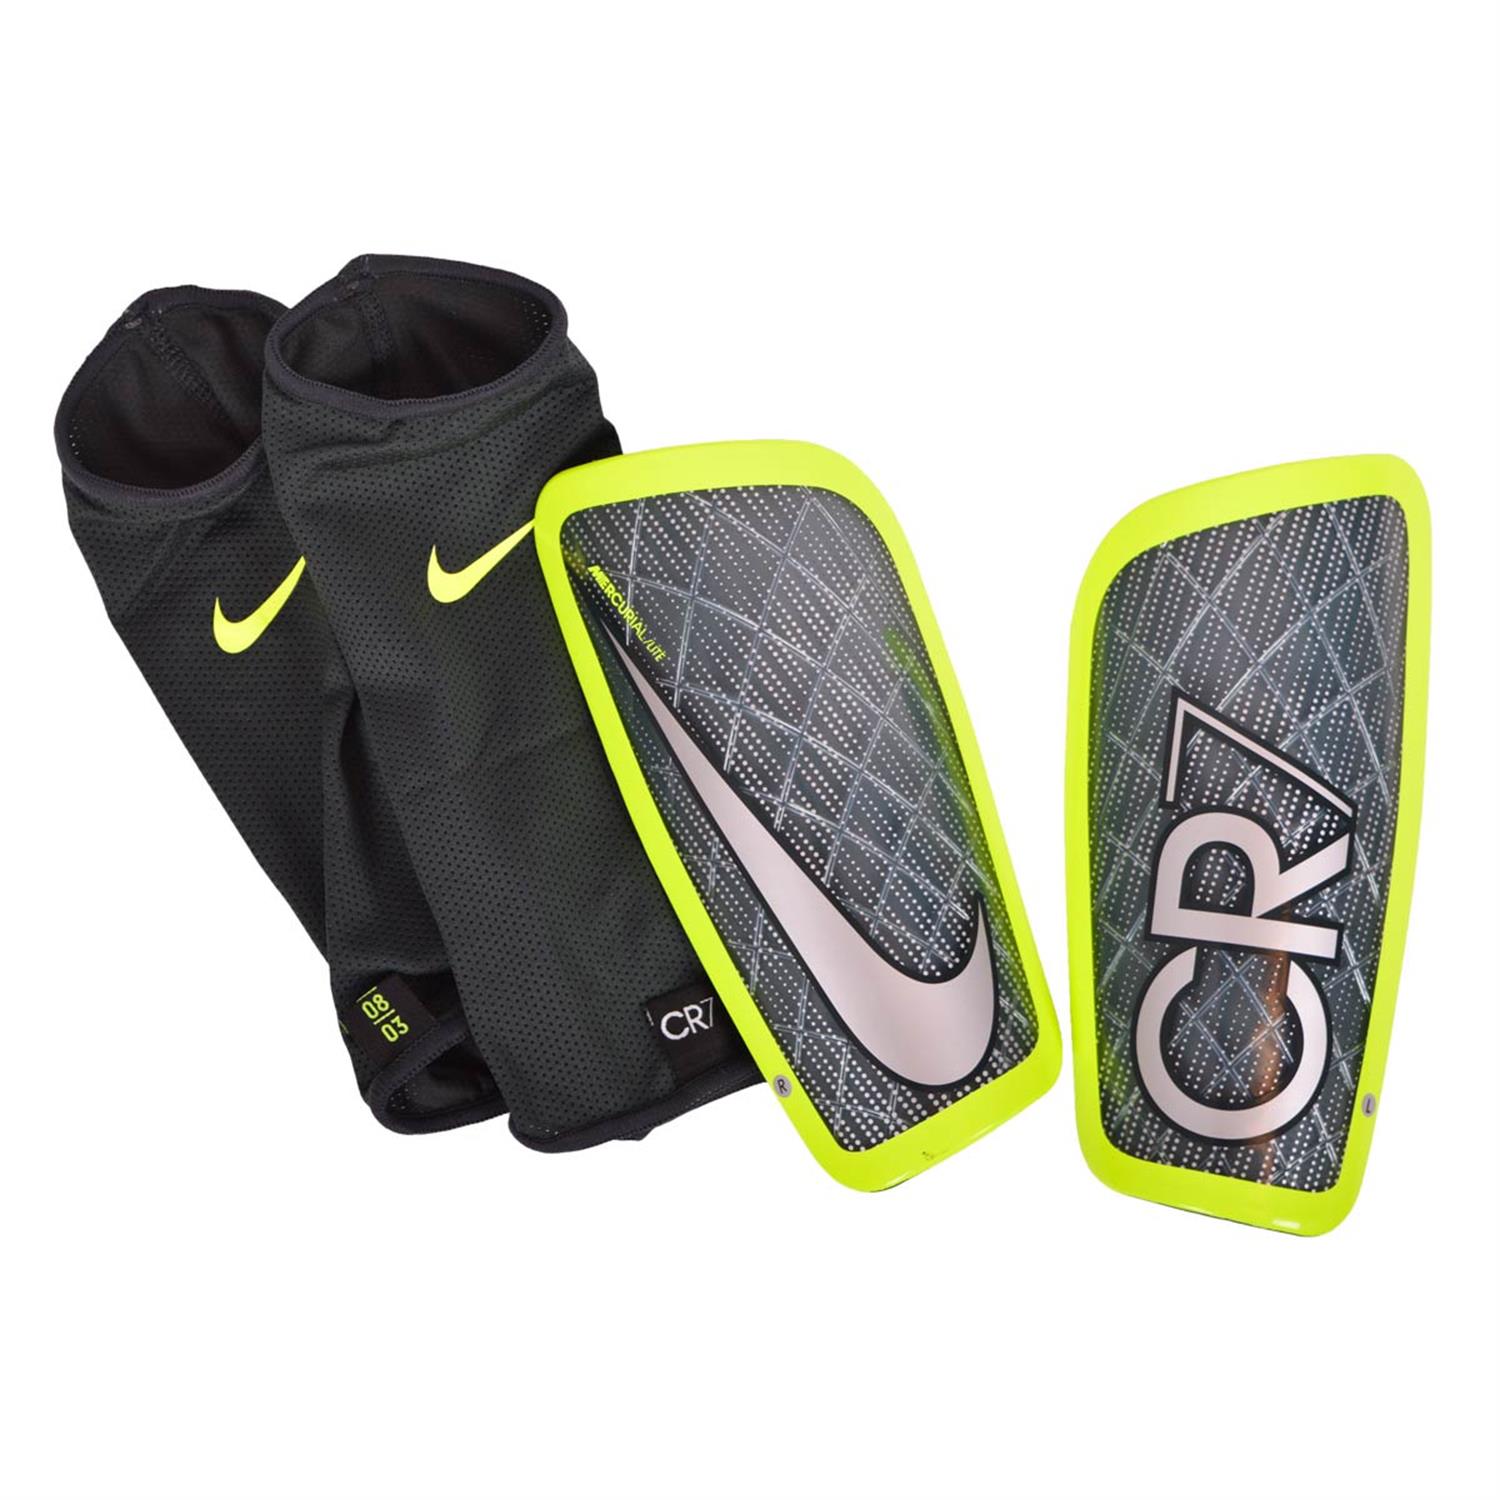 Espinilleras Nike CR7 Mercurial colore verde - Nike - SportIT.com